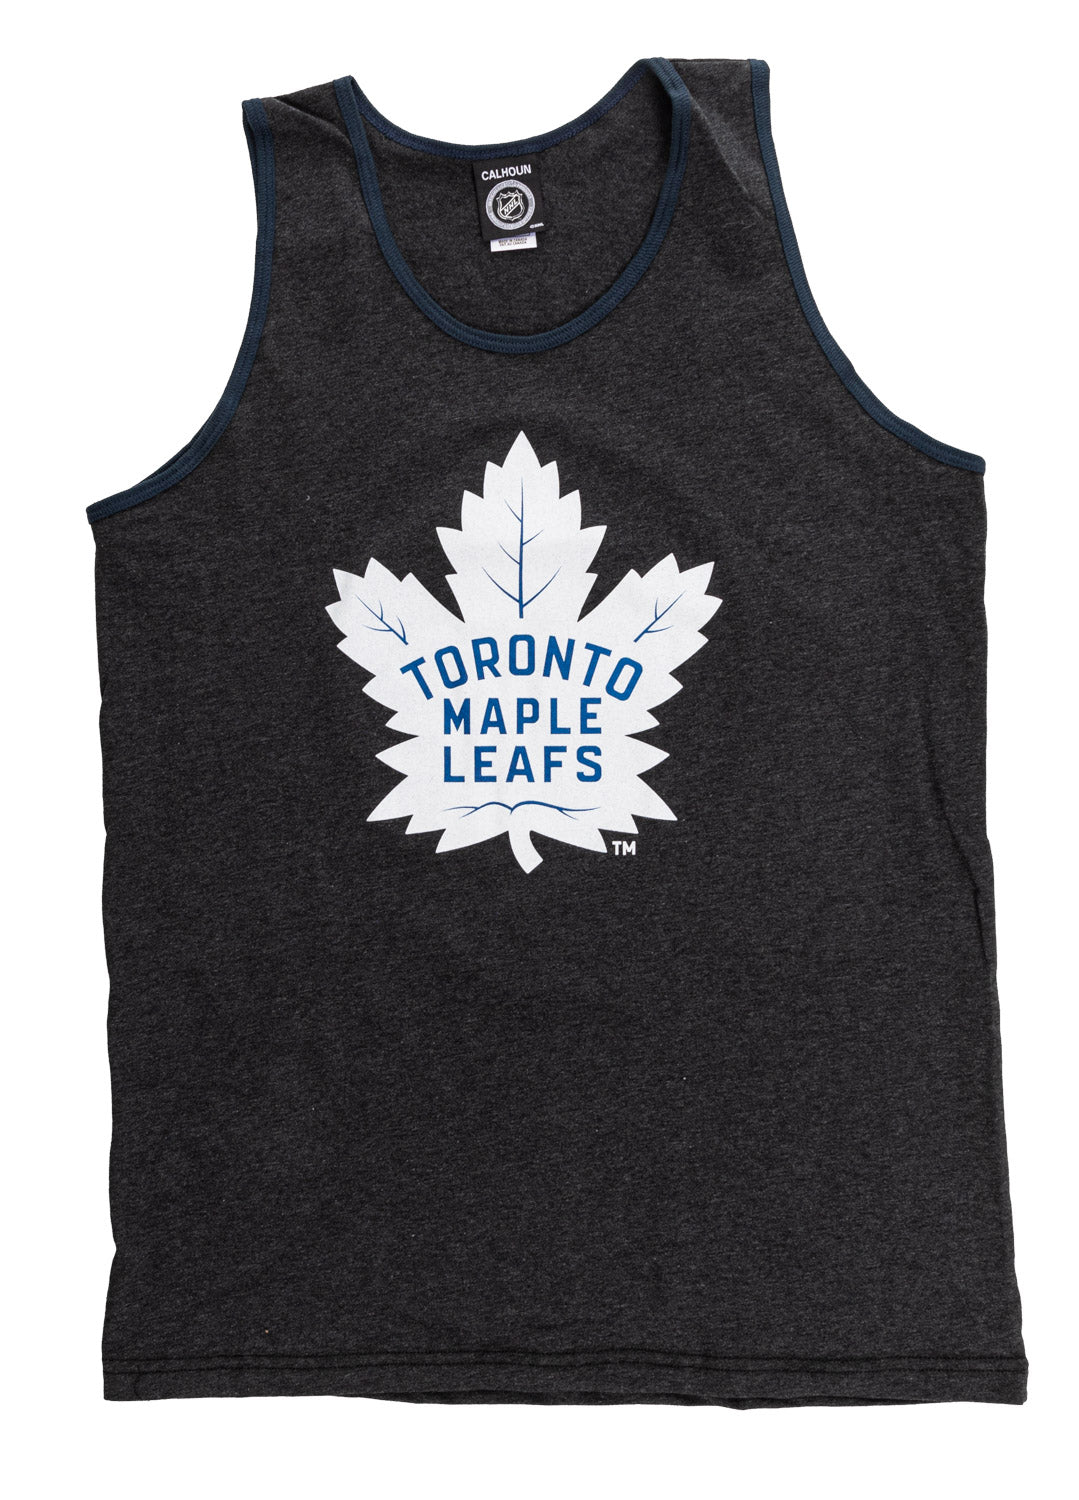 Toronto Maple Leafs Original Tank Top for Men